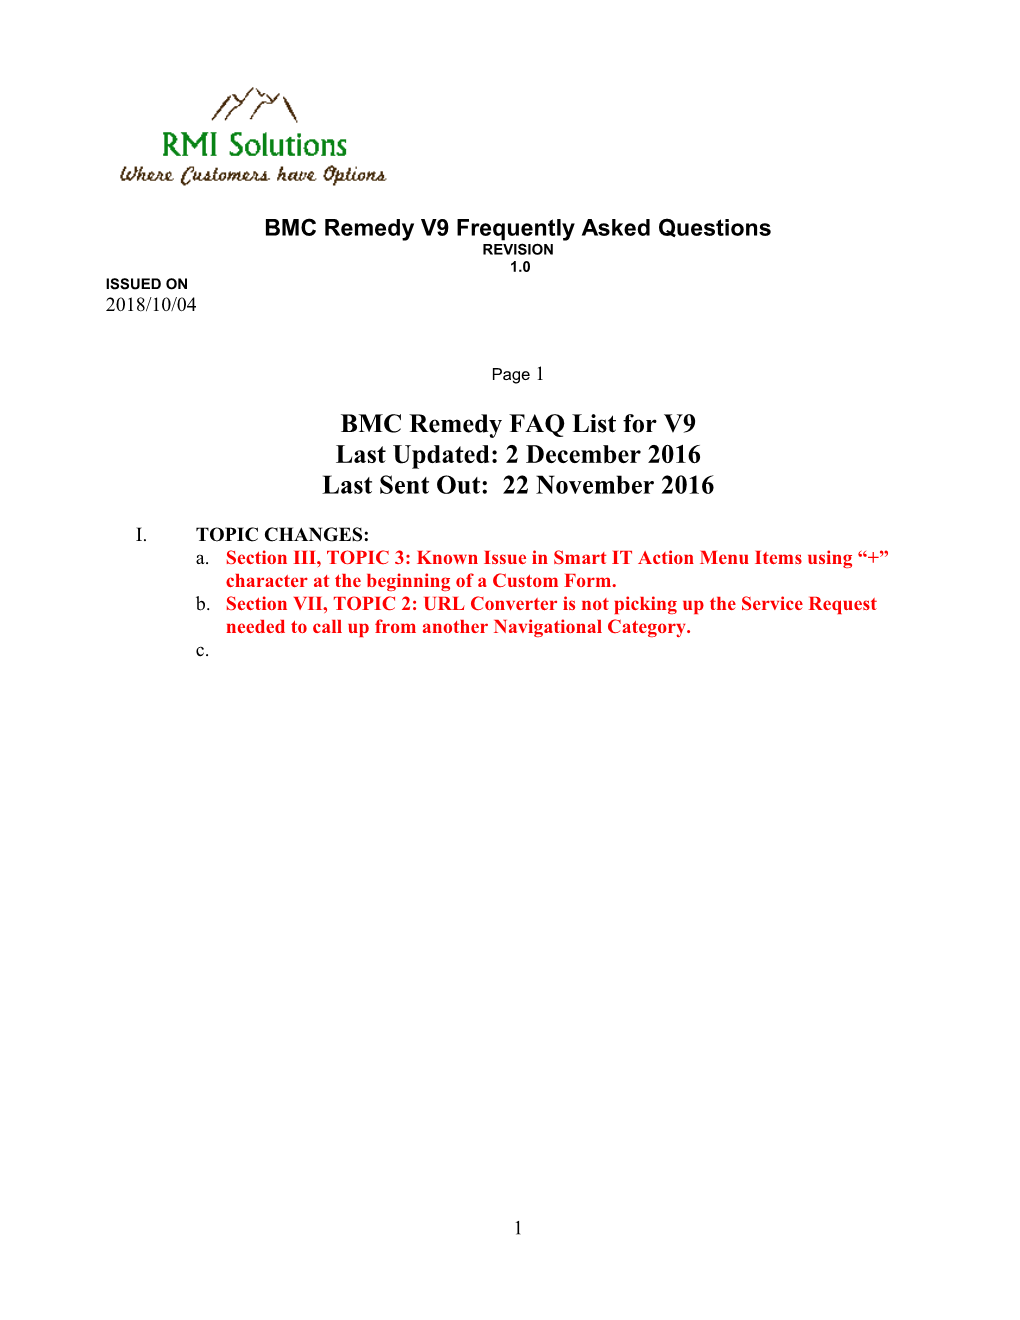 BMC Remedy FAQ List for V9